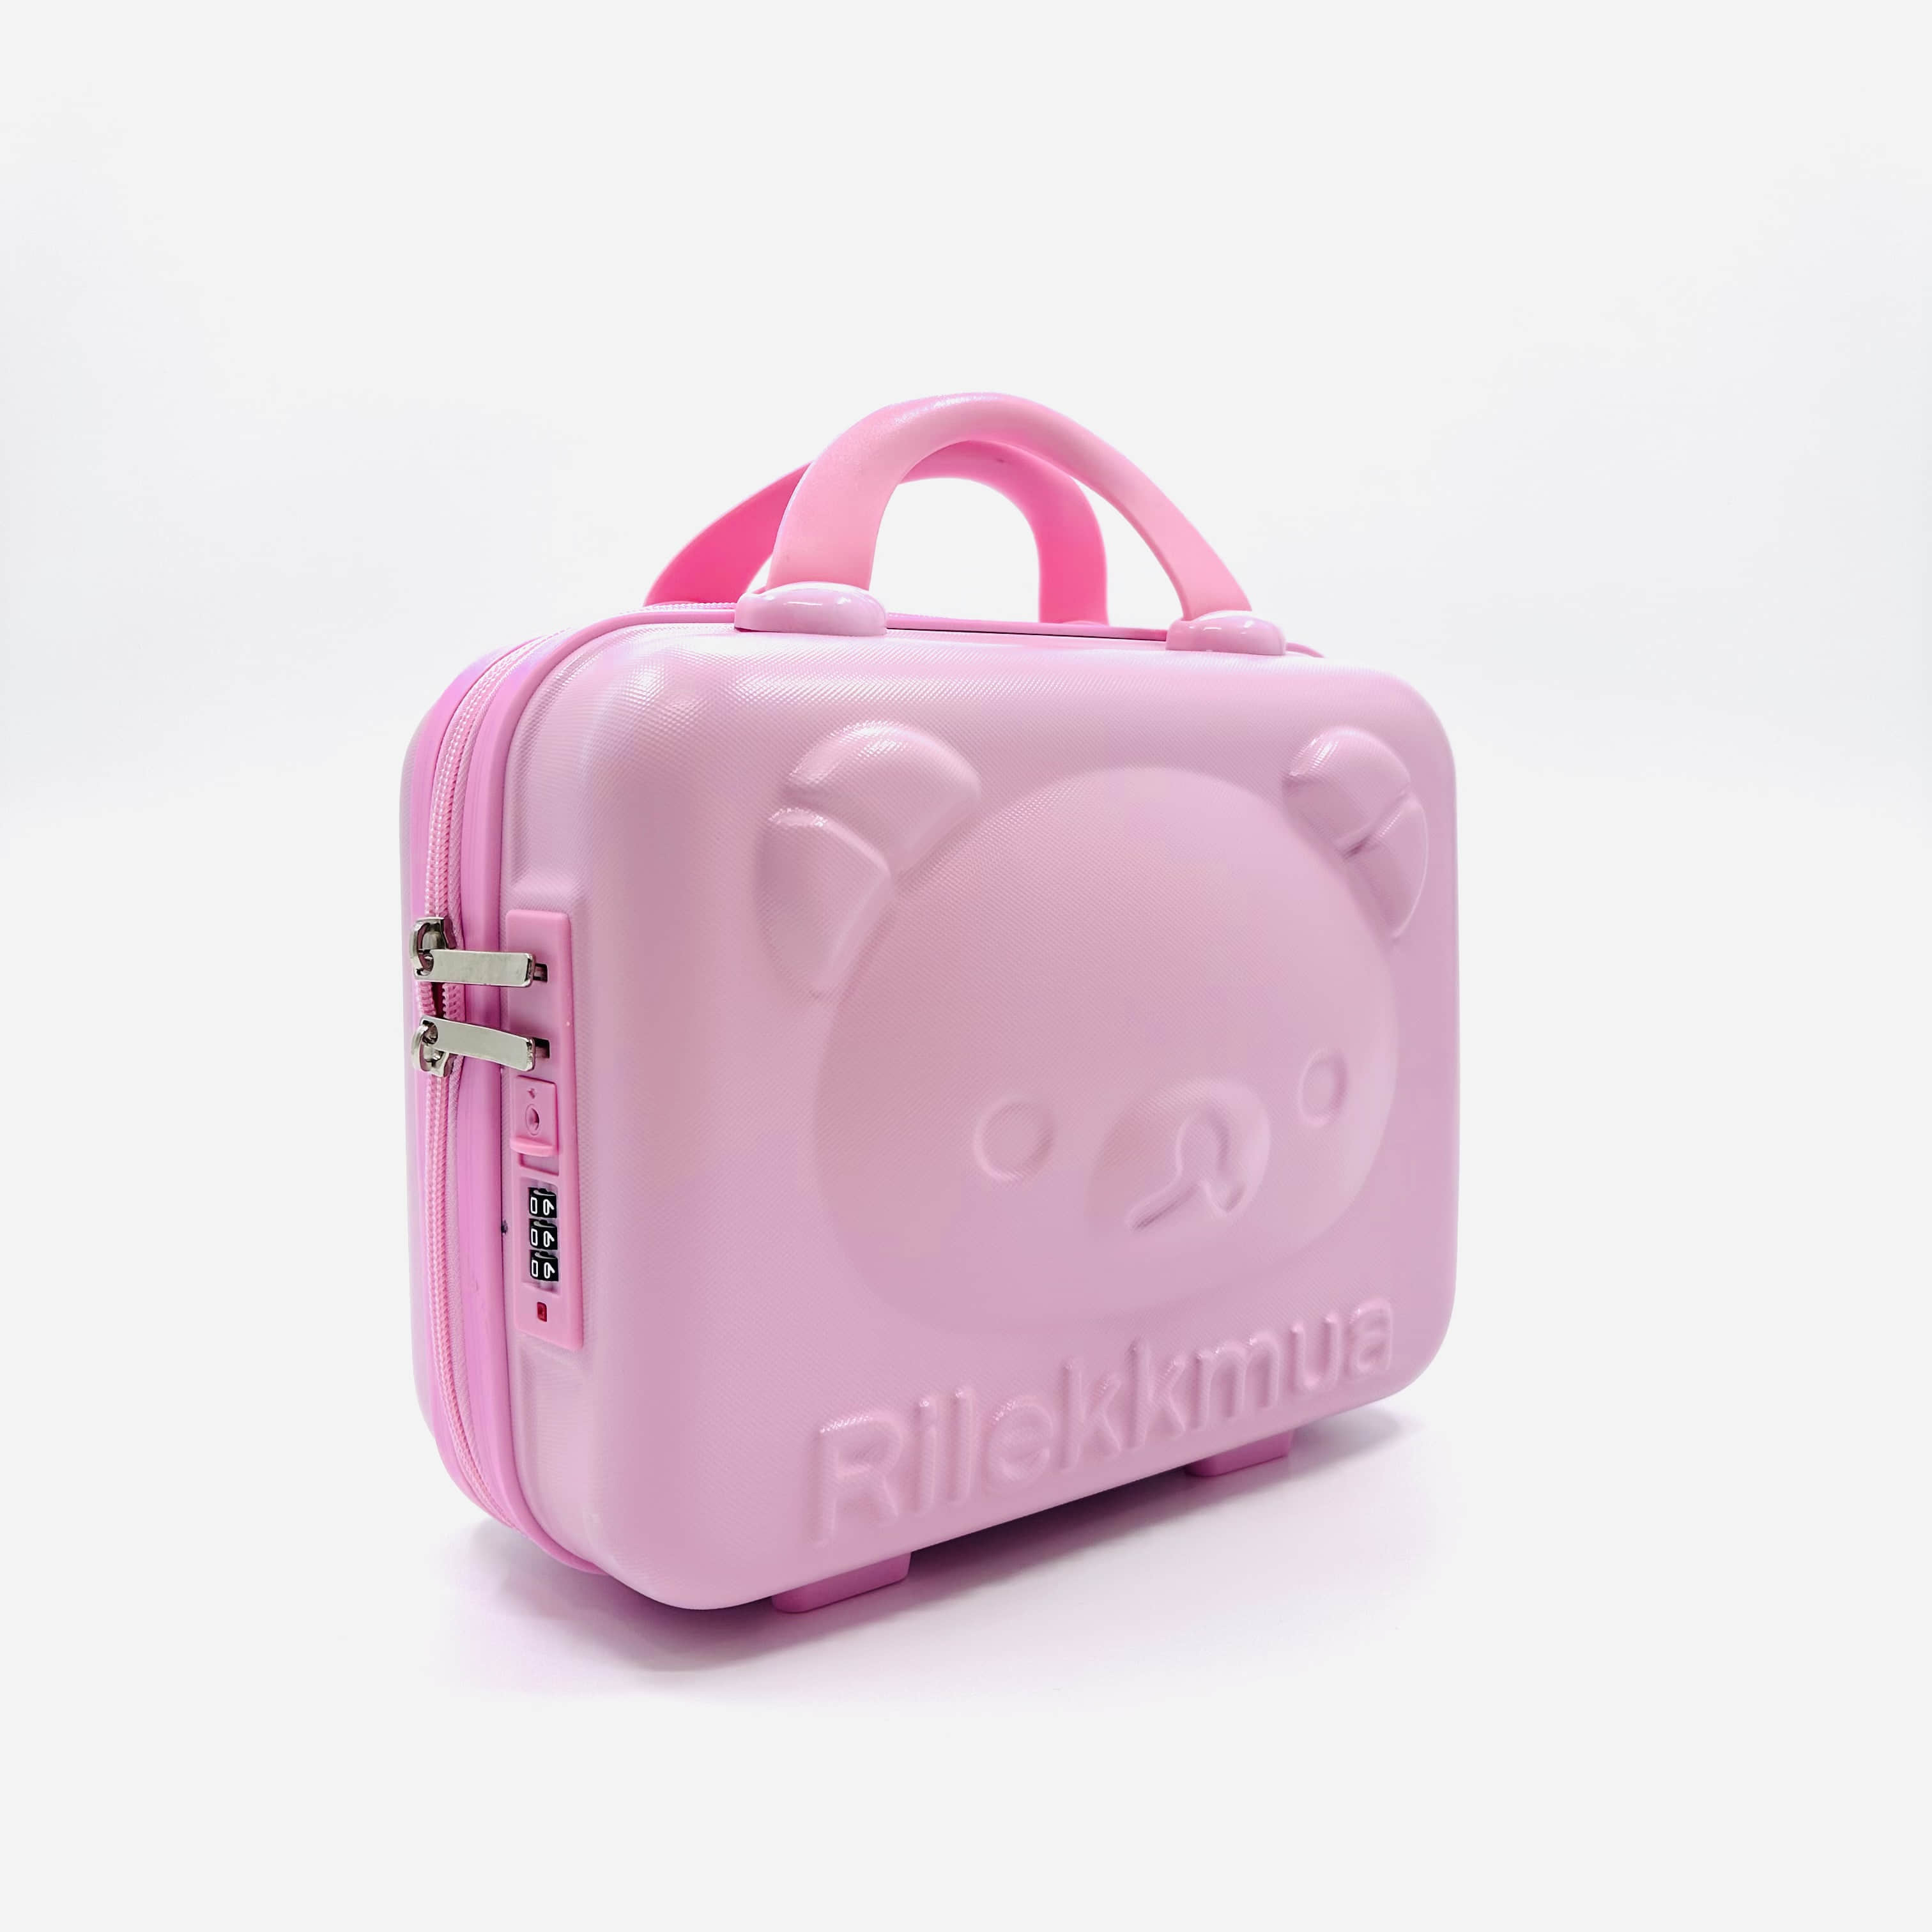 Teddy bear Suitcase 14inch Pink